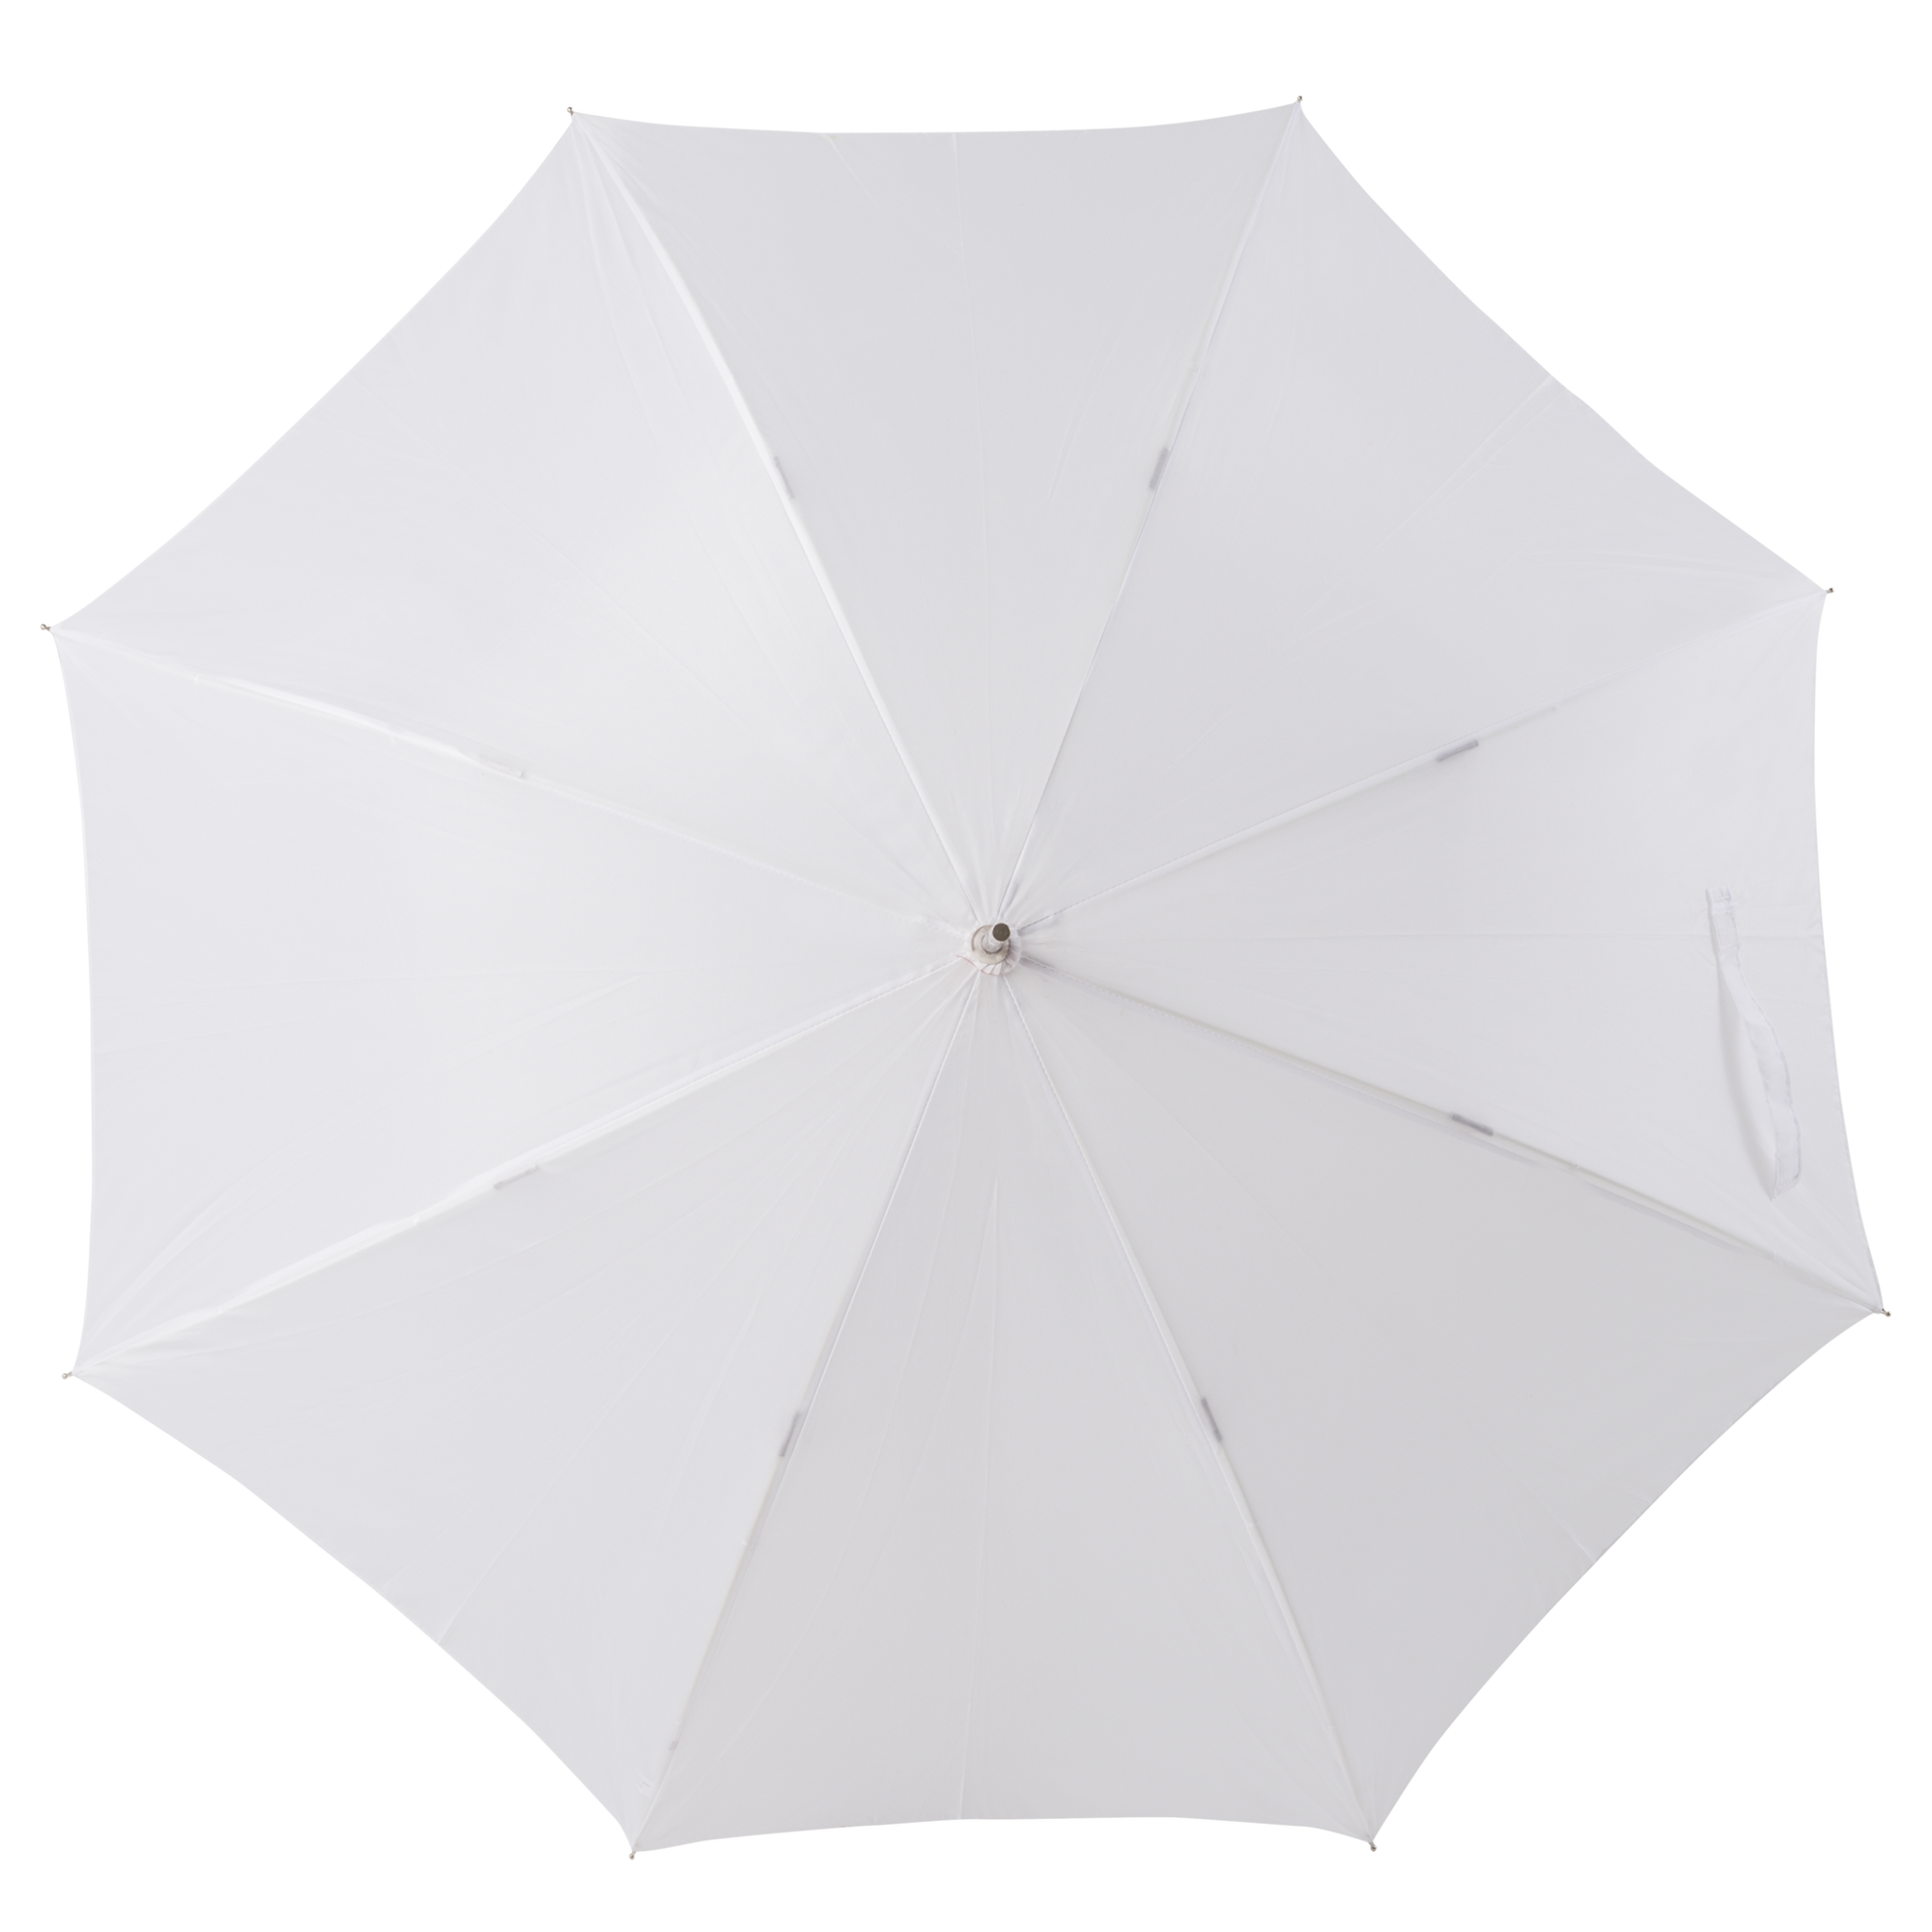 Umbrella rental - white